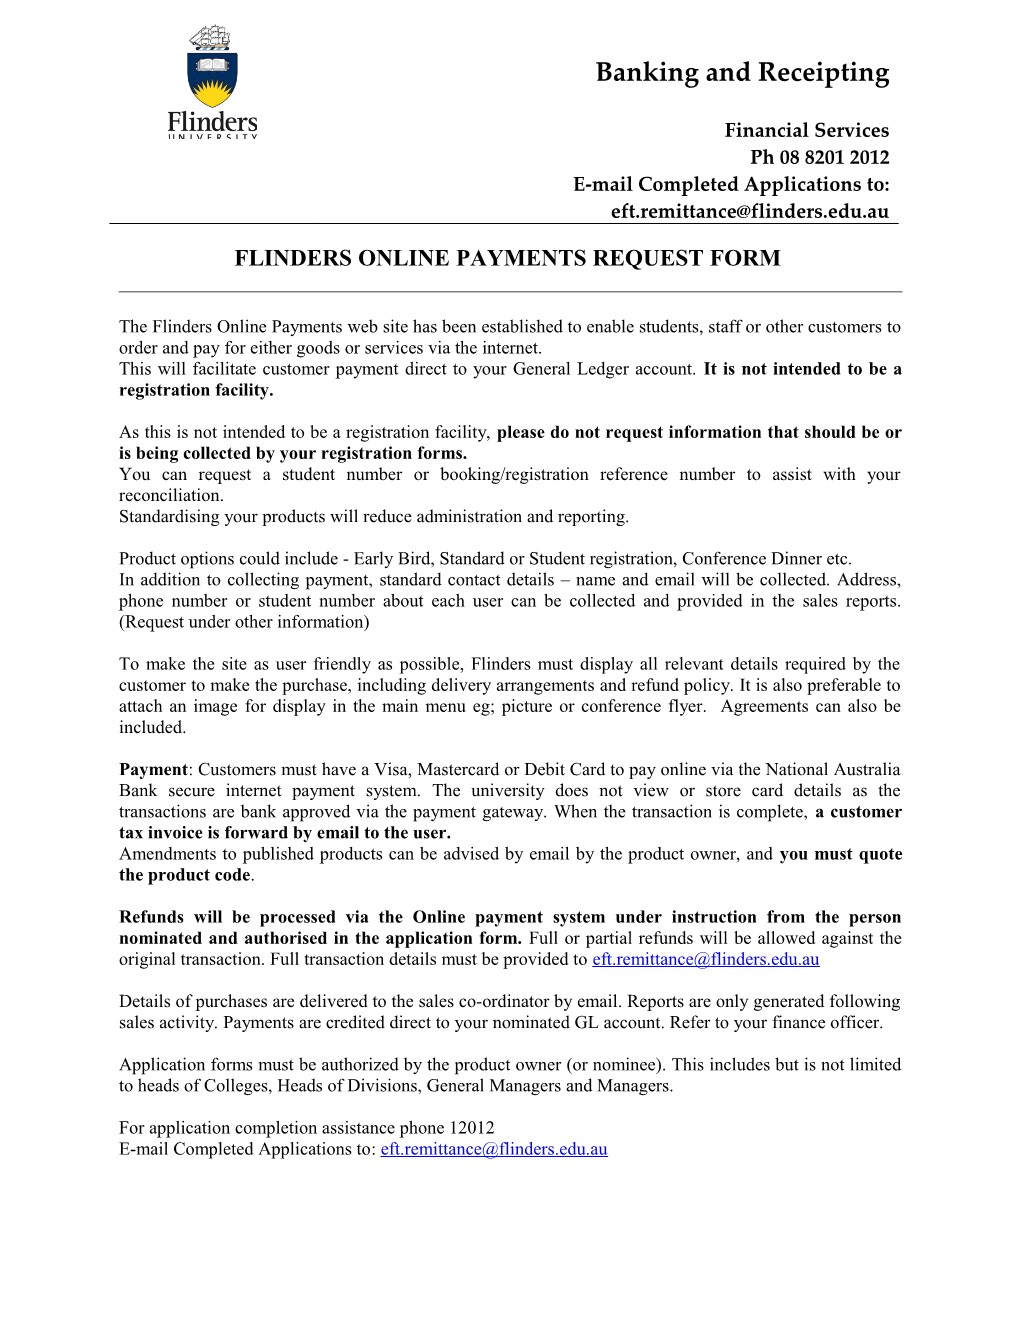 Flinders Online Payments Request Form